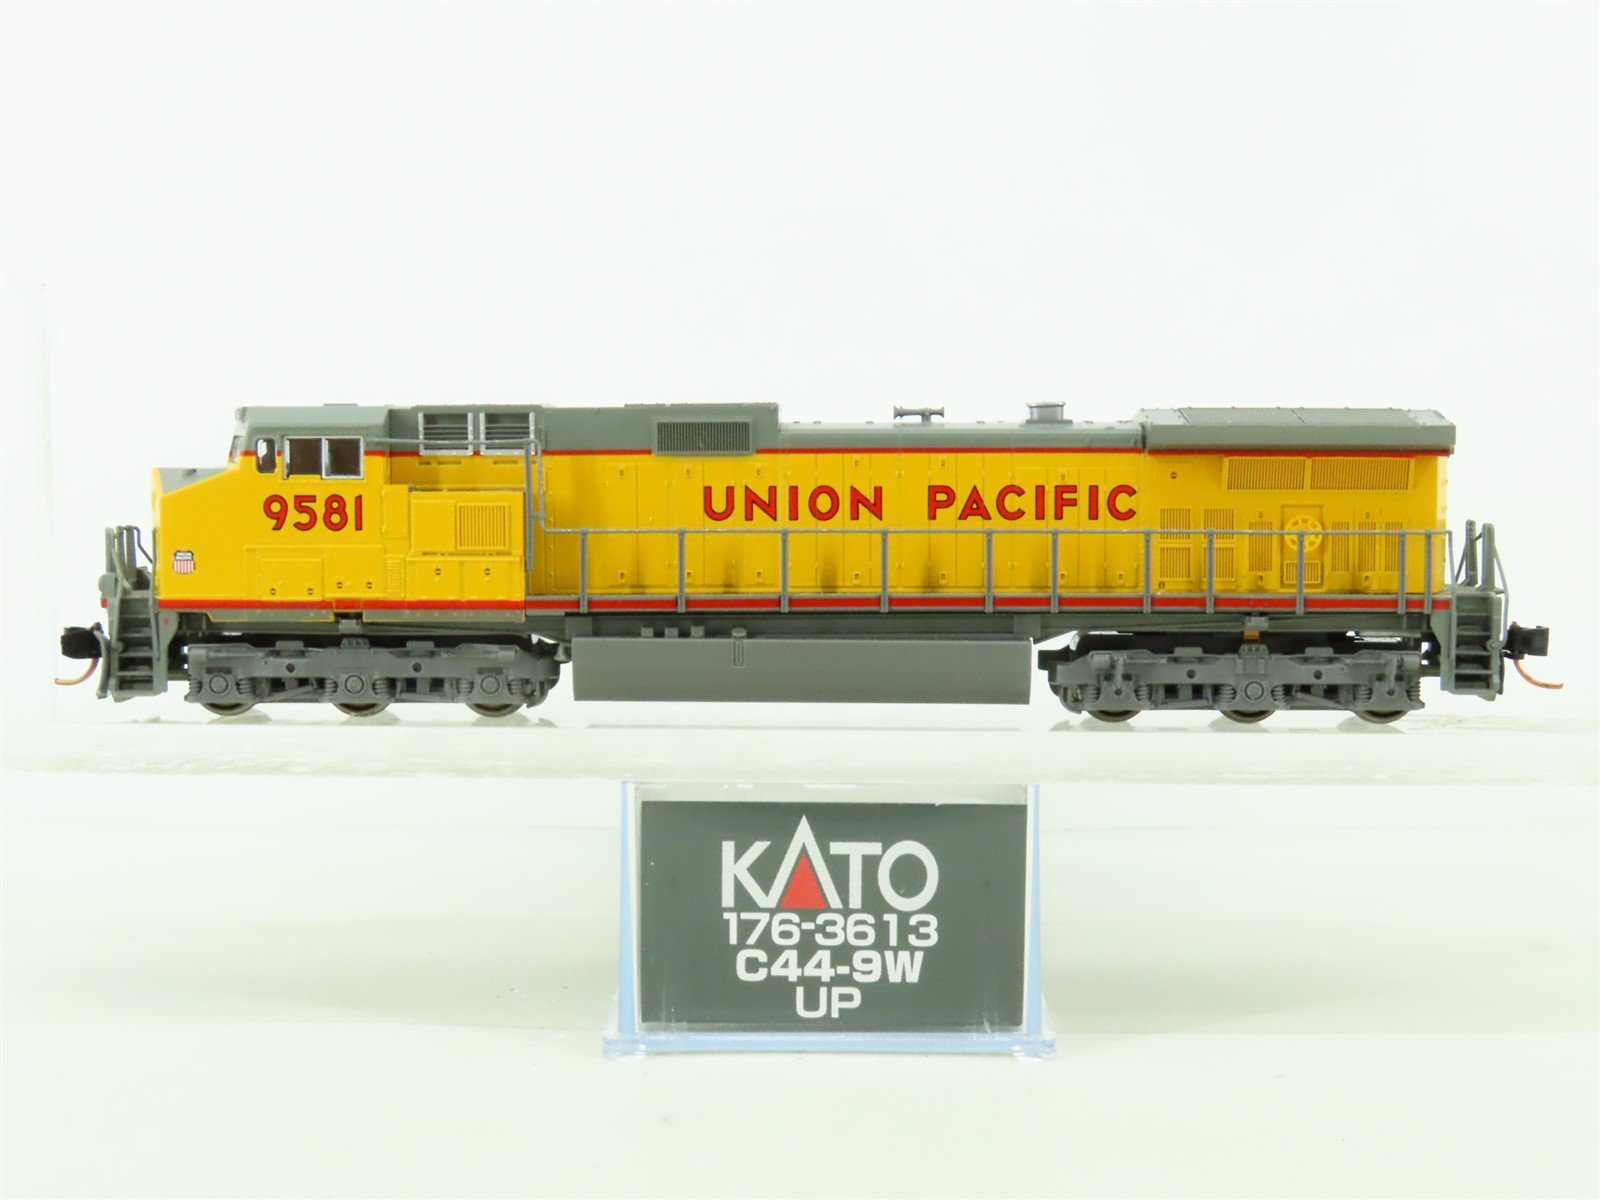 N Scale KATO 176-3613A UP Union Pacific GE C44-9W "Dash 9" Diesel #9581 w/DCC